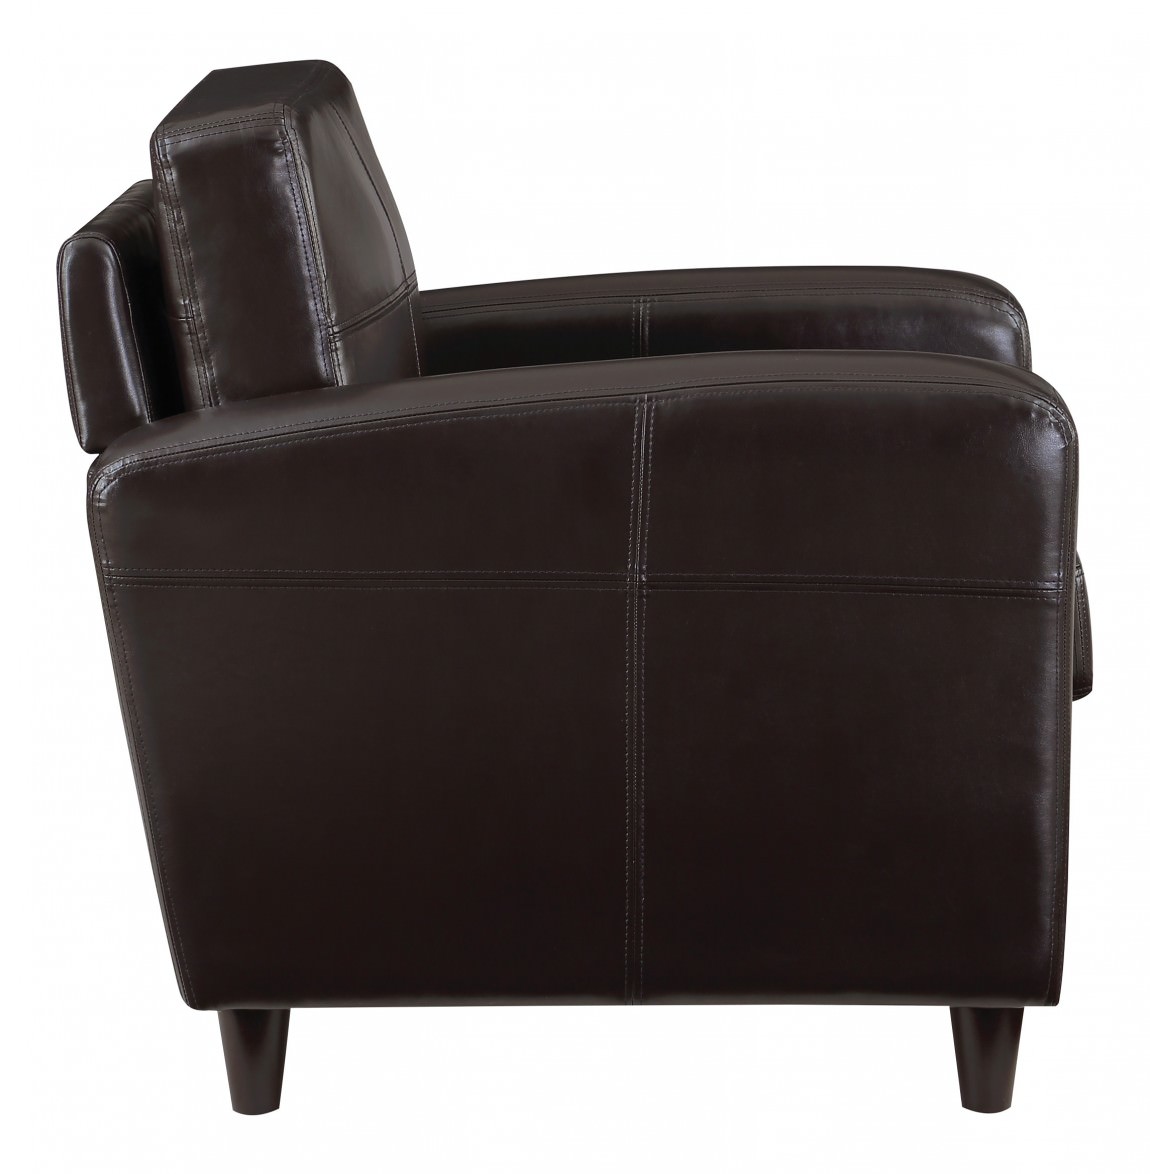 33 X 33 High Density Upholstery Foam Cushion chair Cushion Square